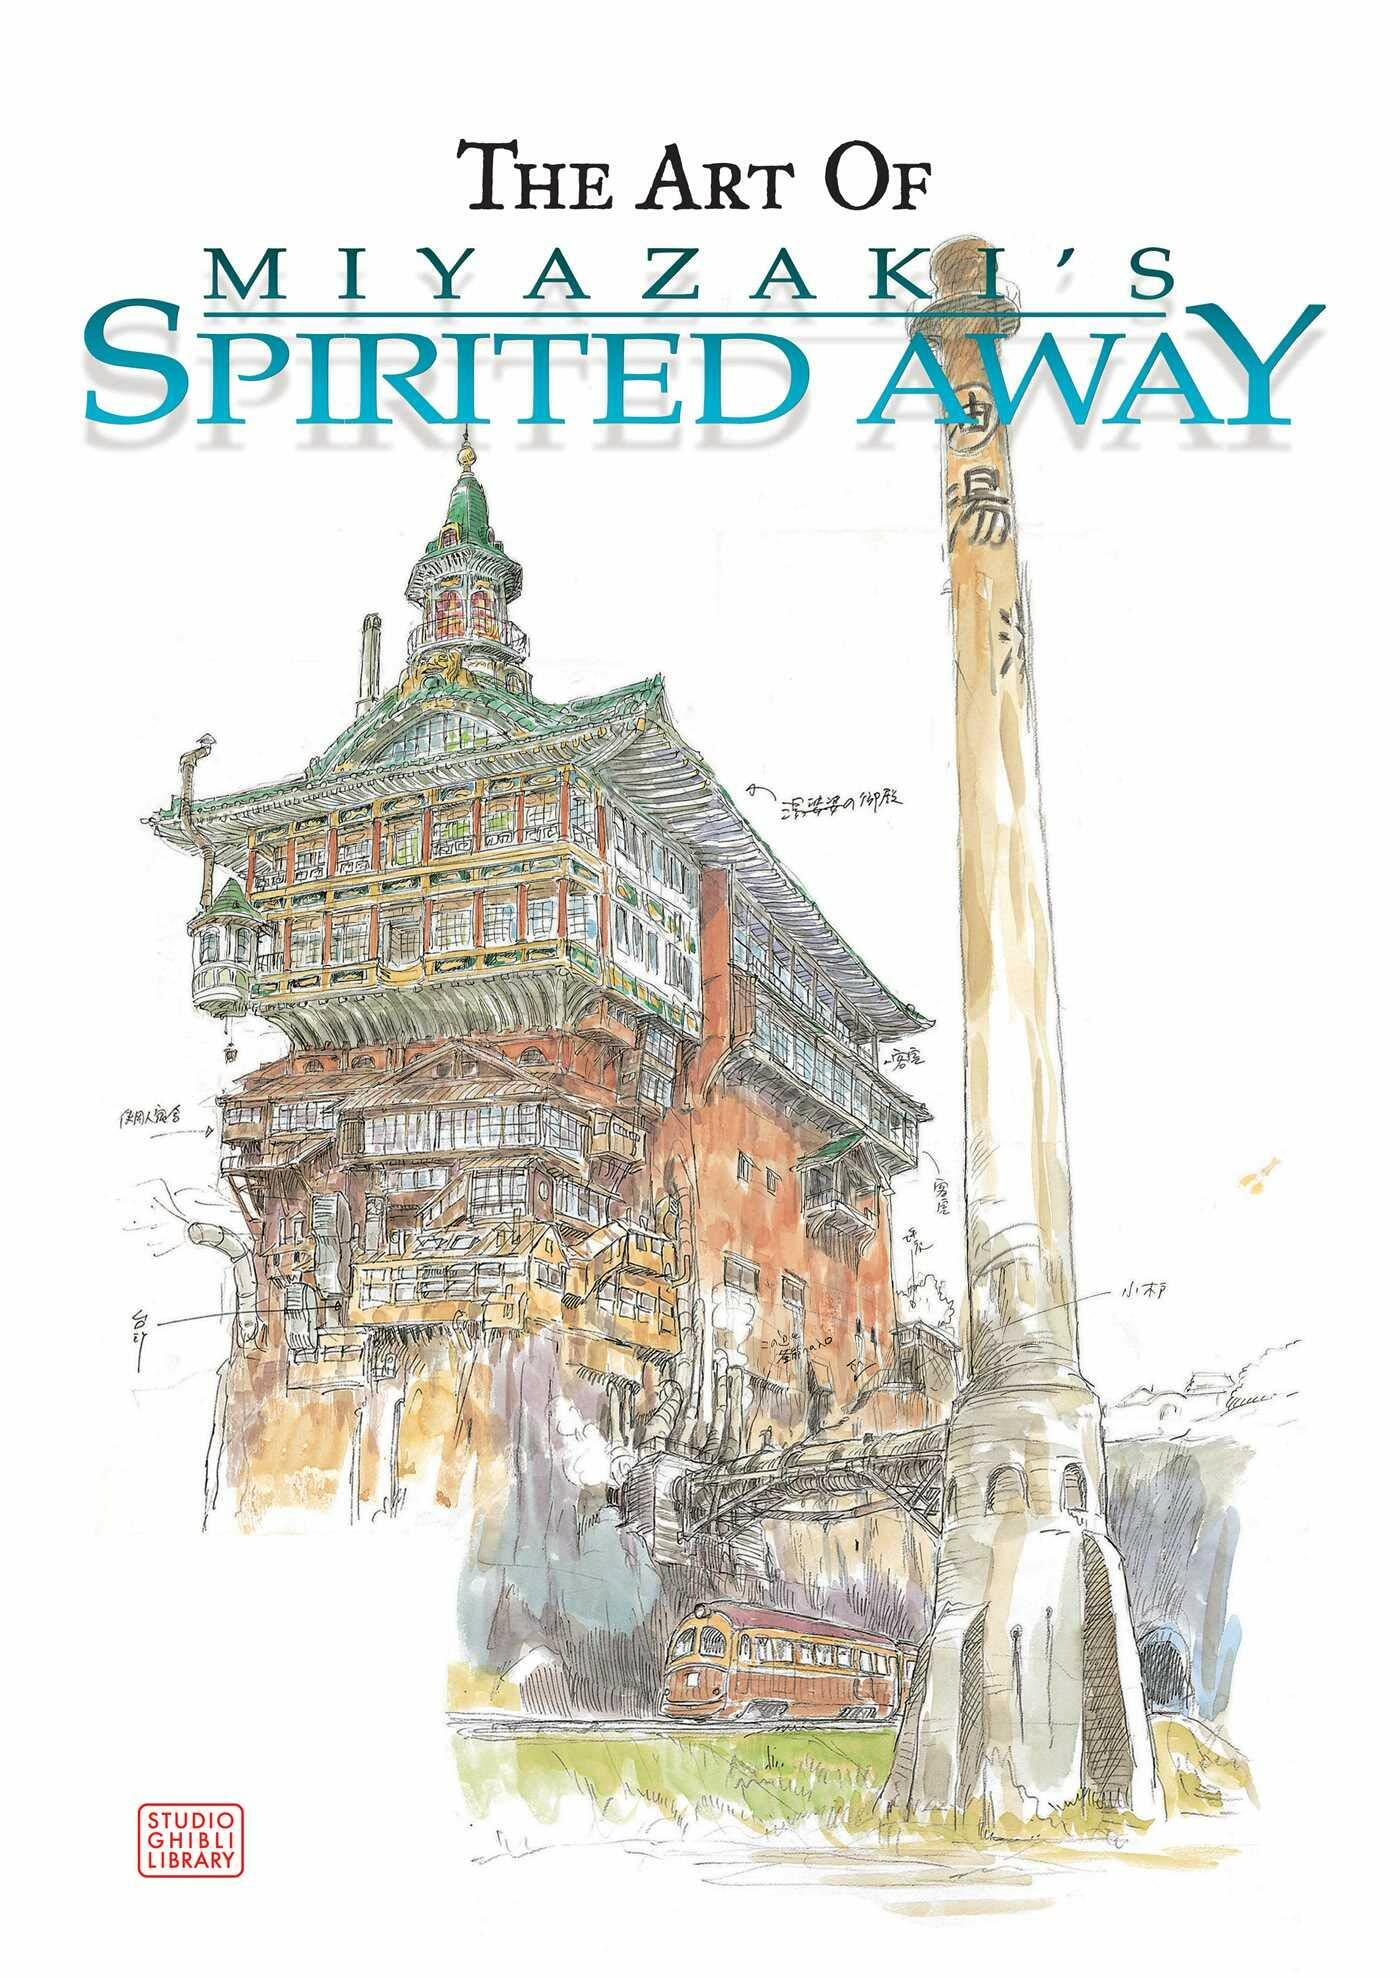 The Art of Spirited Away (Hardcover)